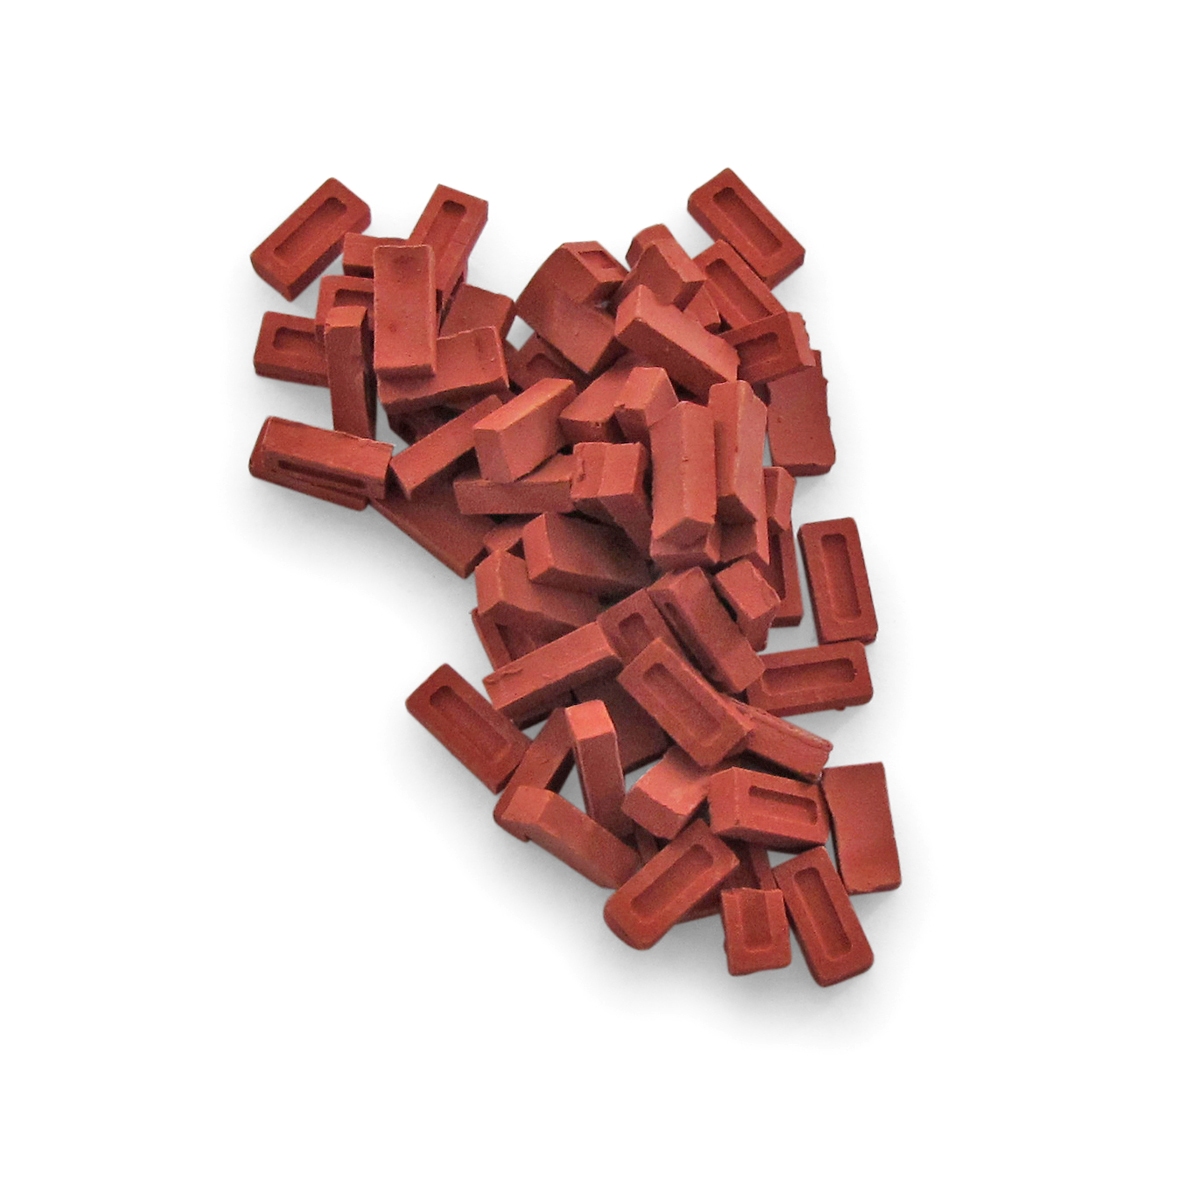 Precolored Bricks (Type 1)